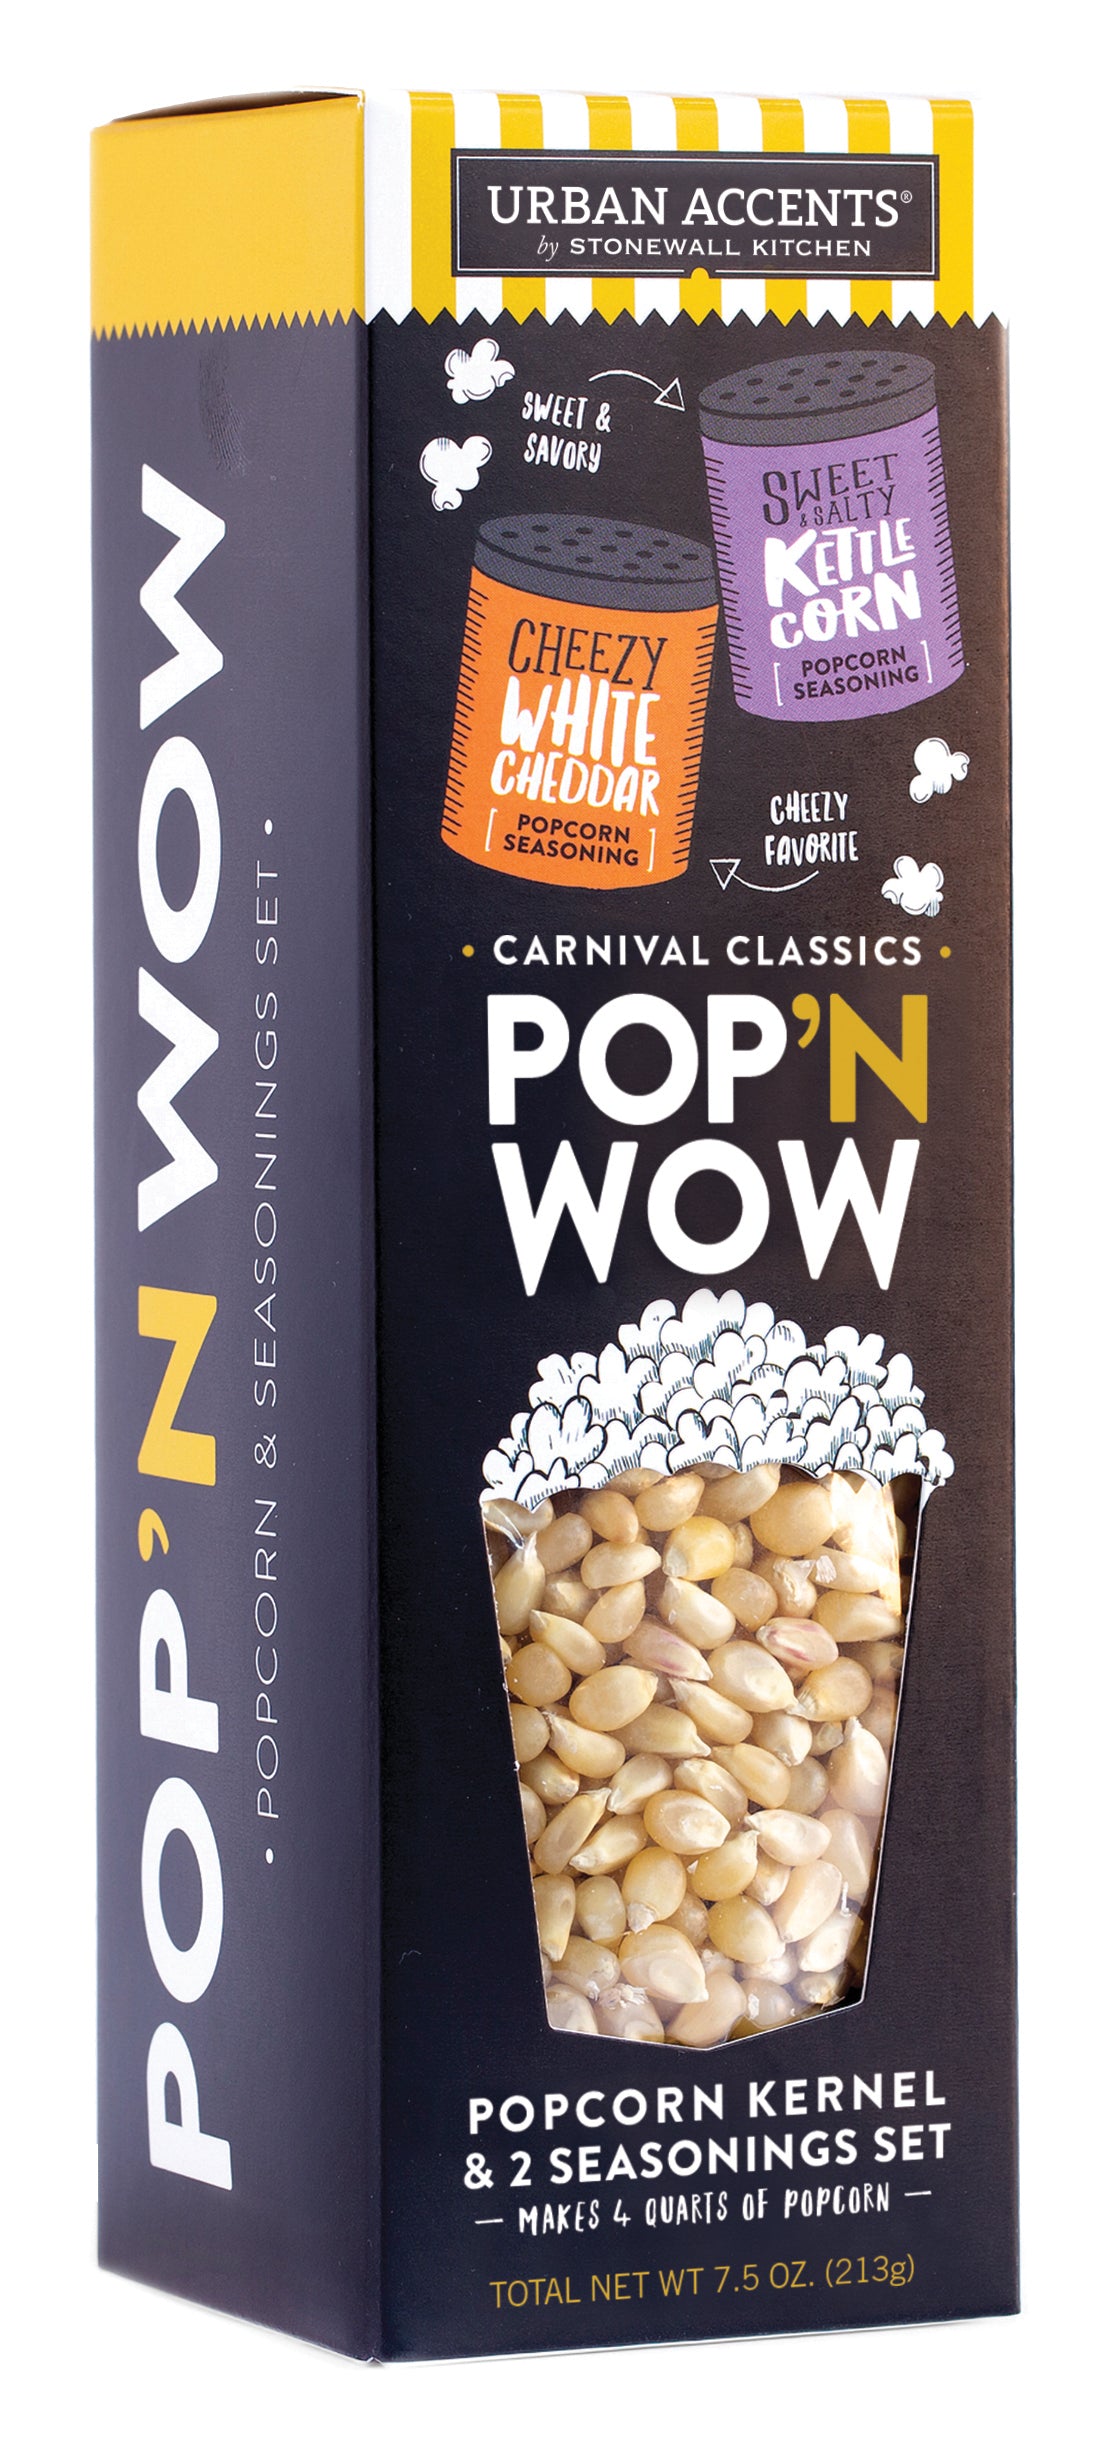 Urban Accents Pop 'n Wow Carnival Classics Popcorn Gift Set